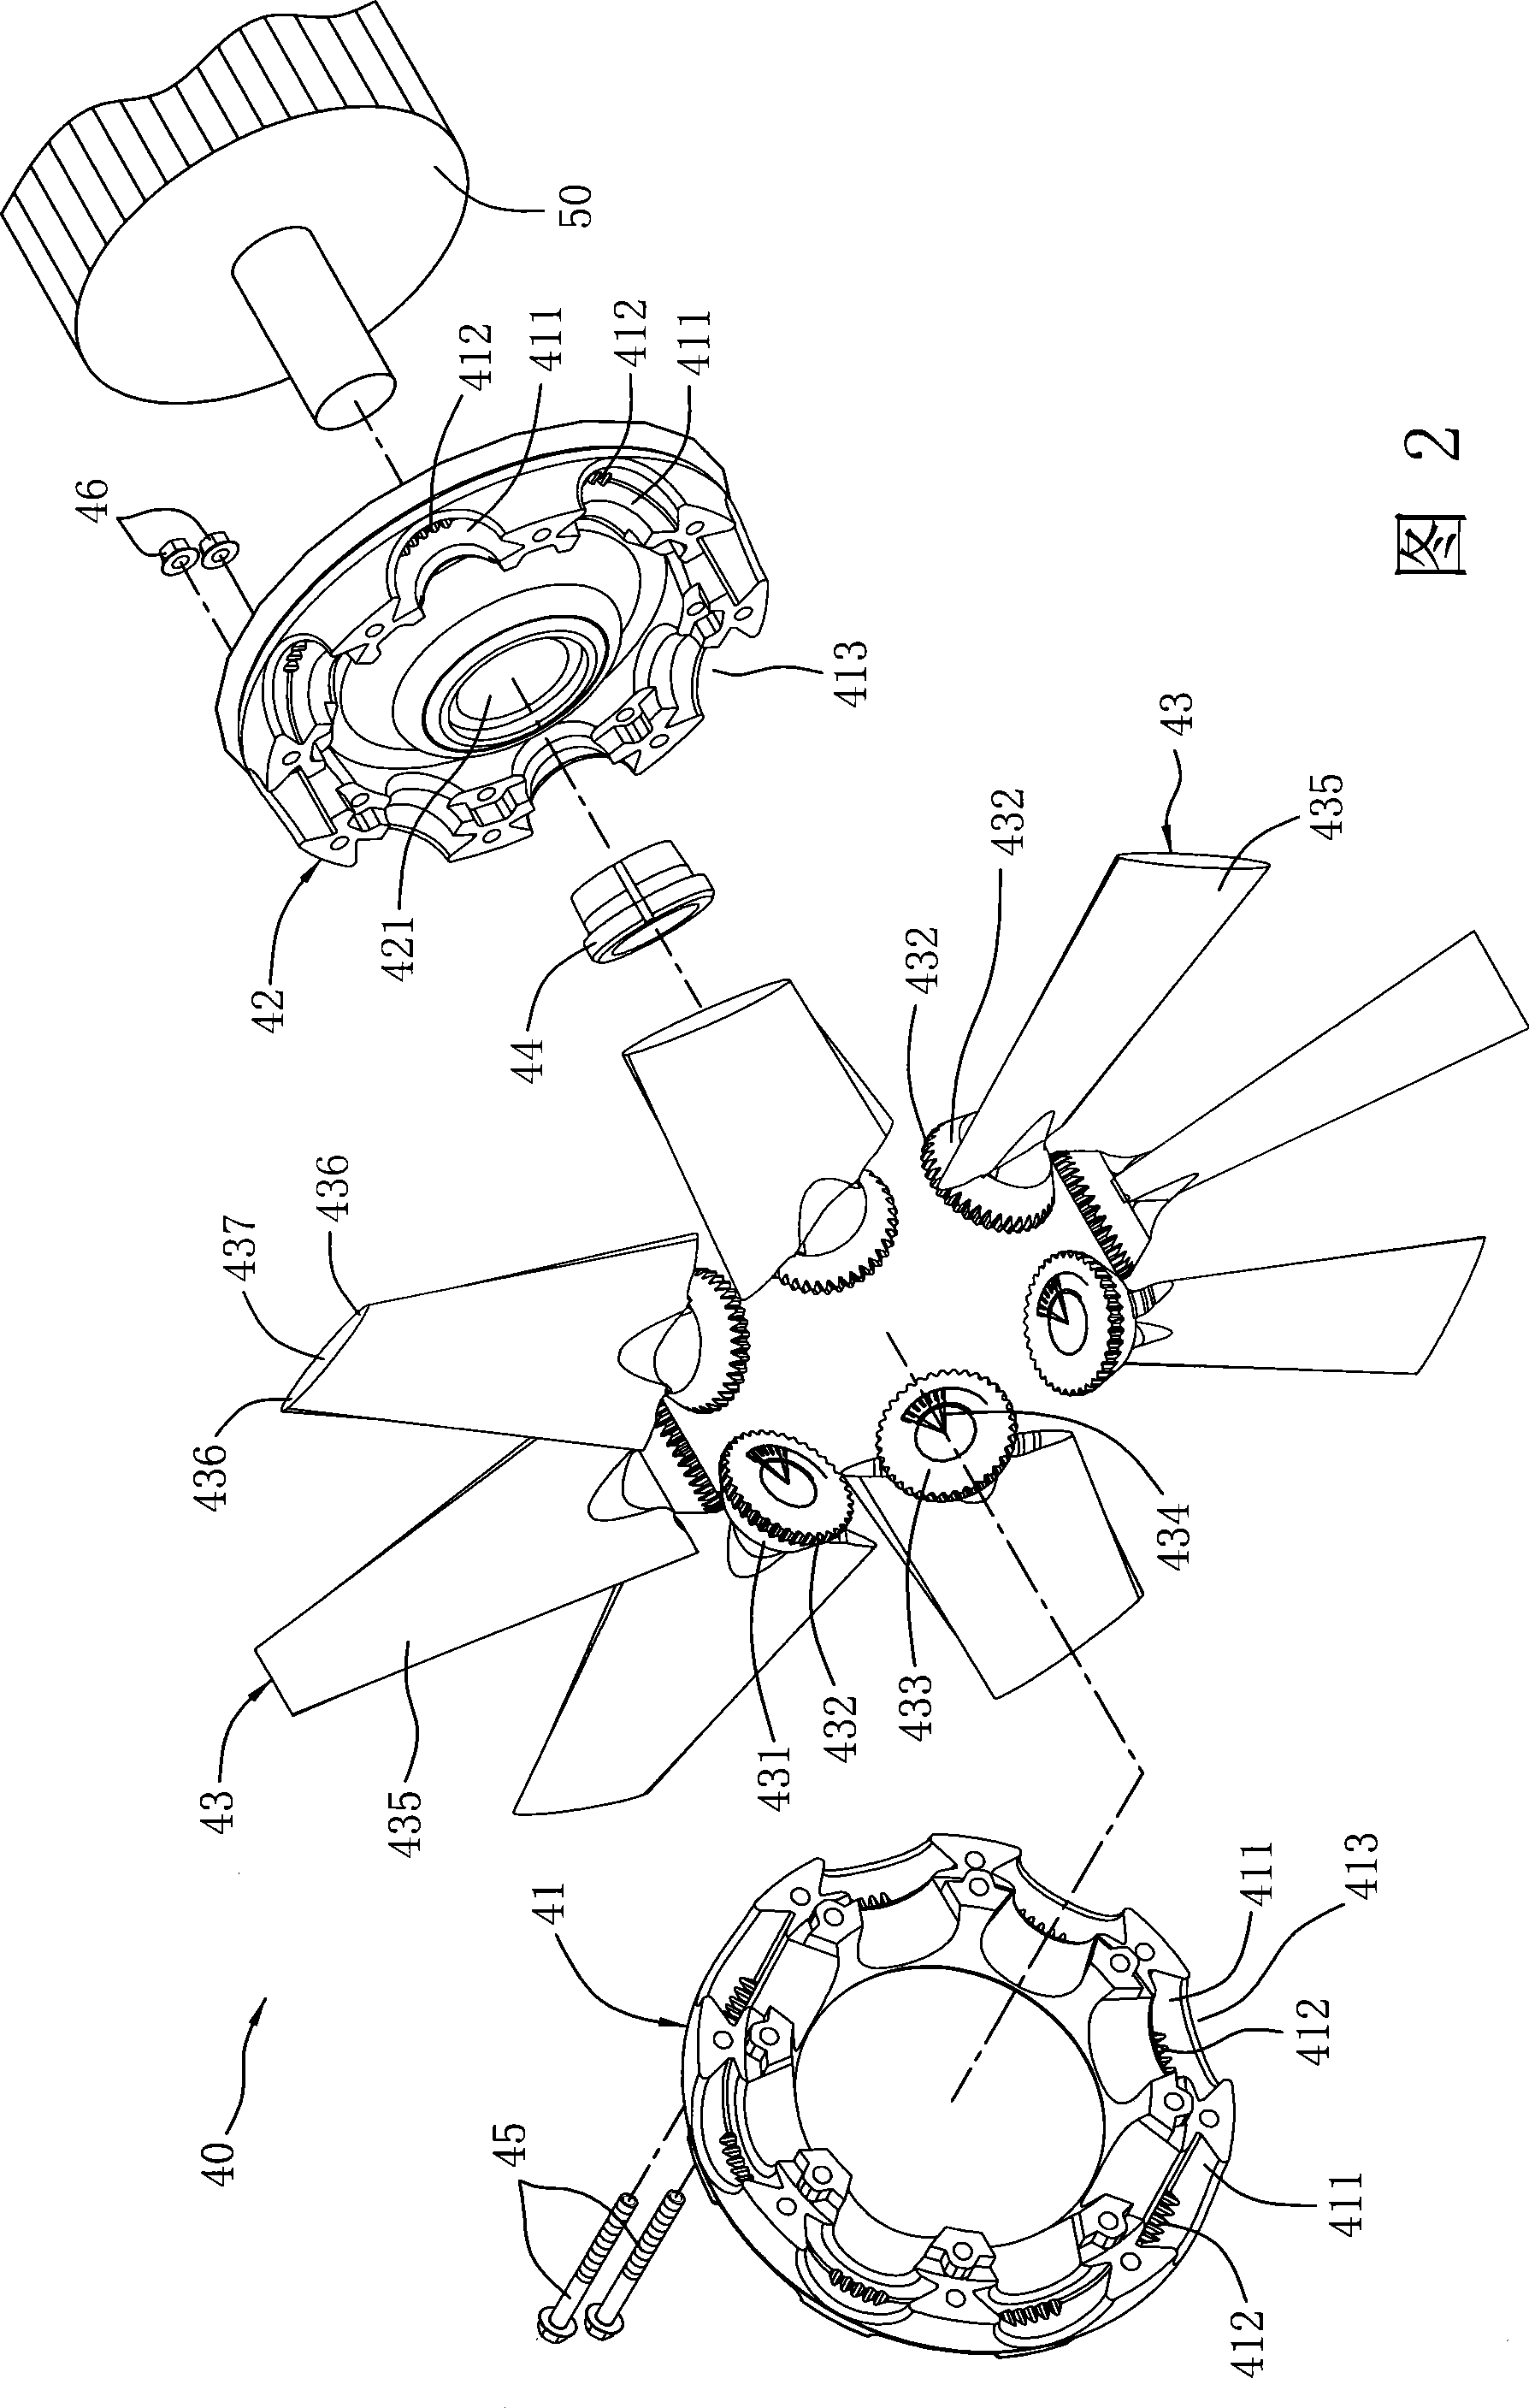 Impeller structure of ventilator